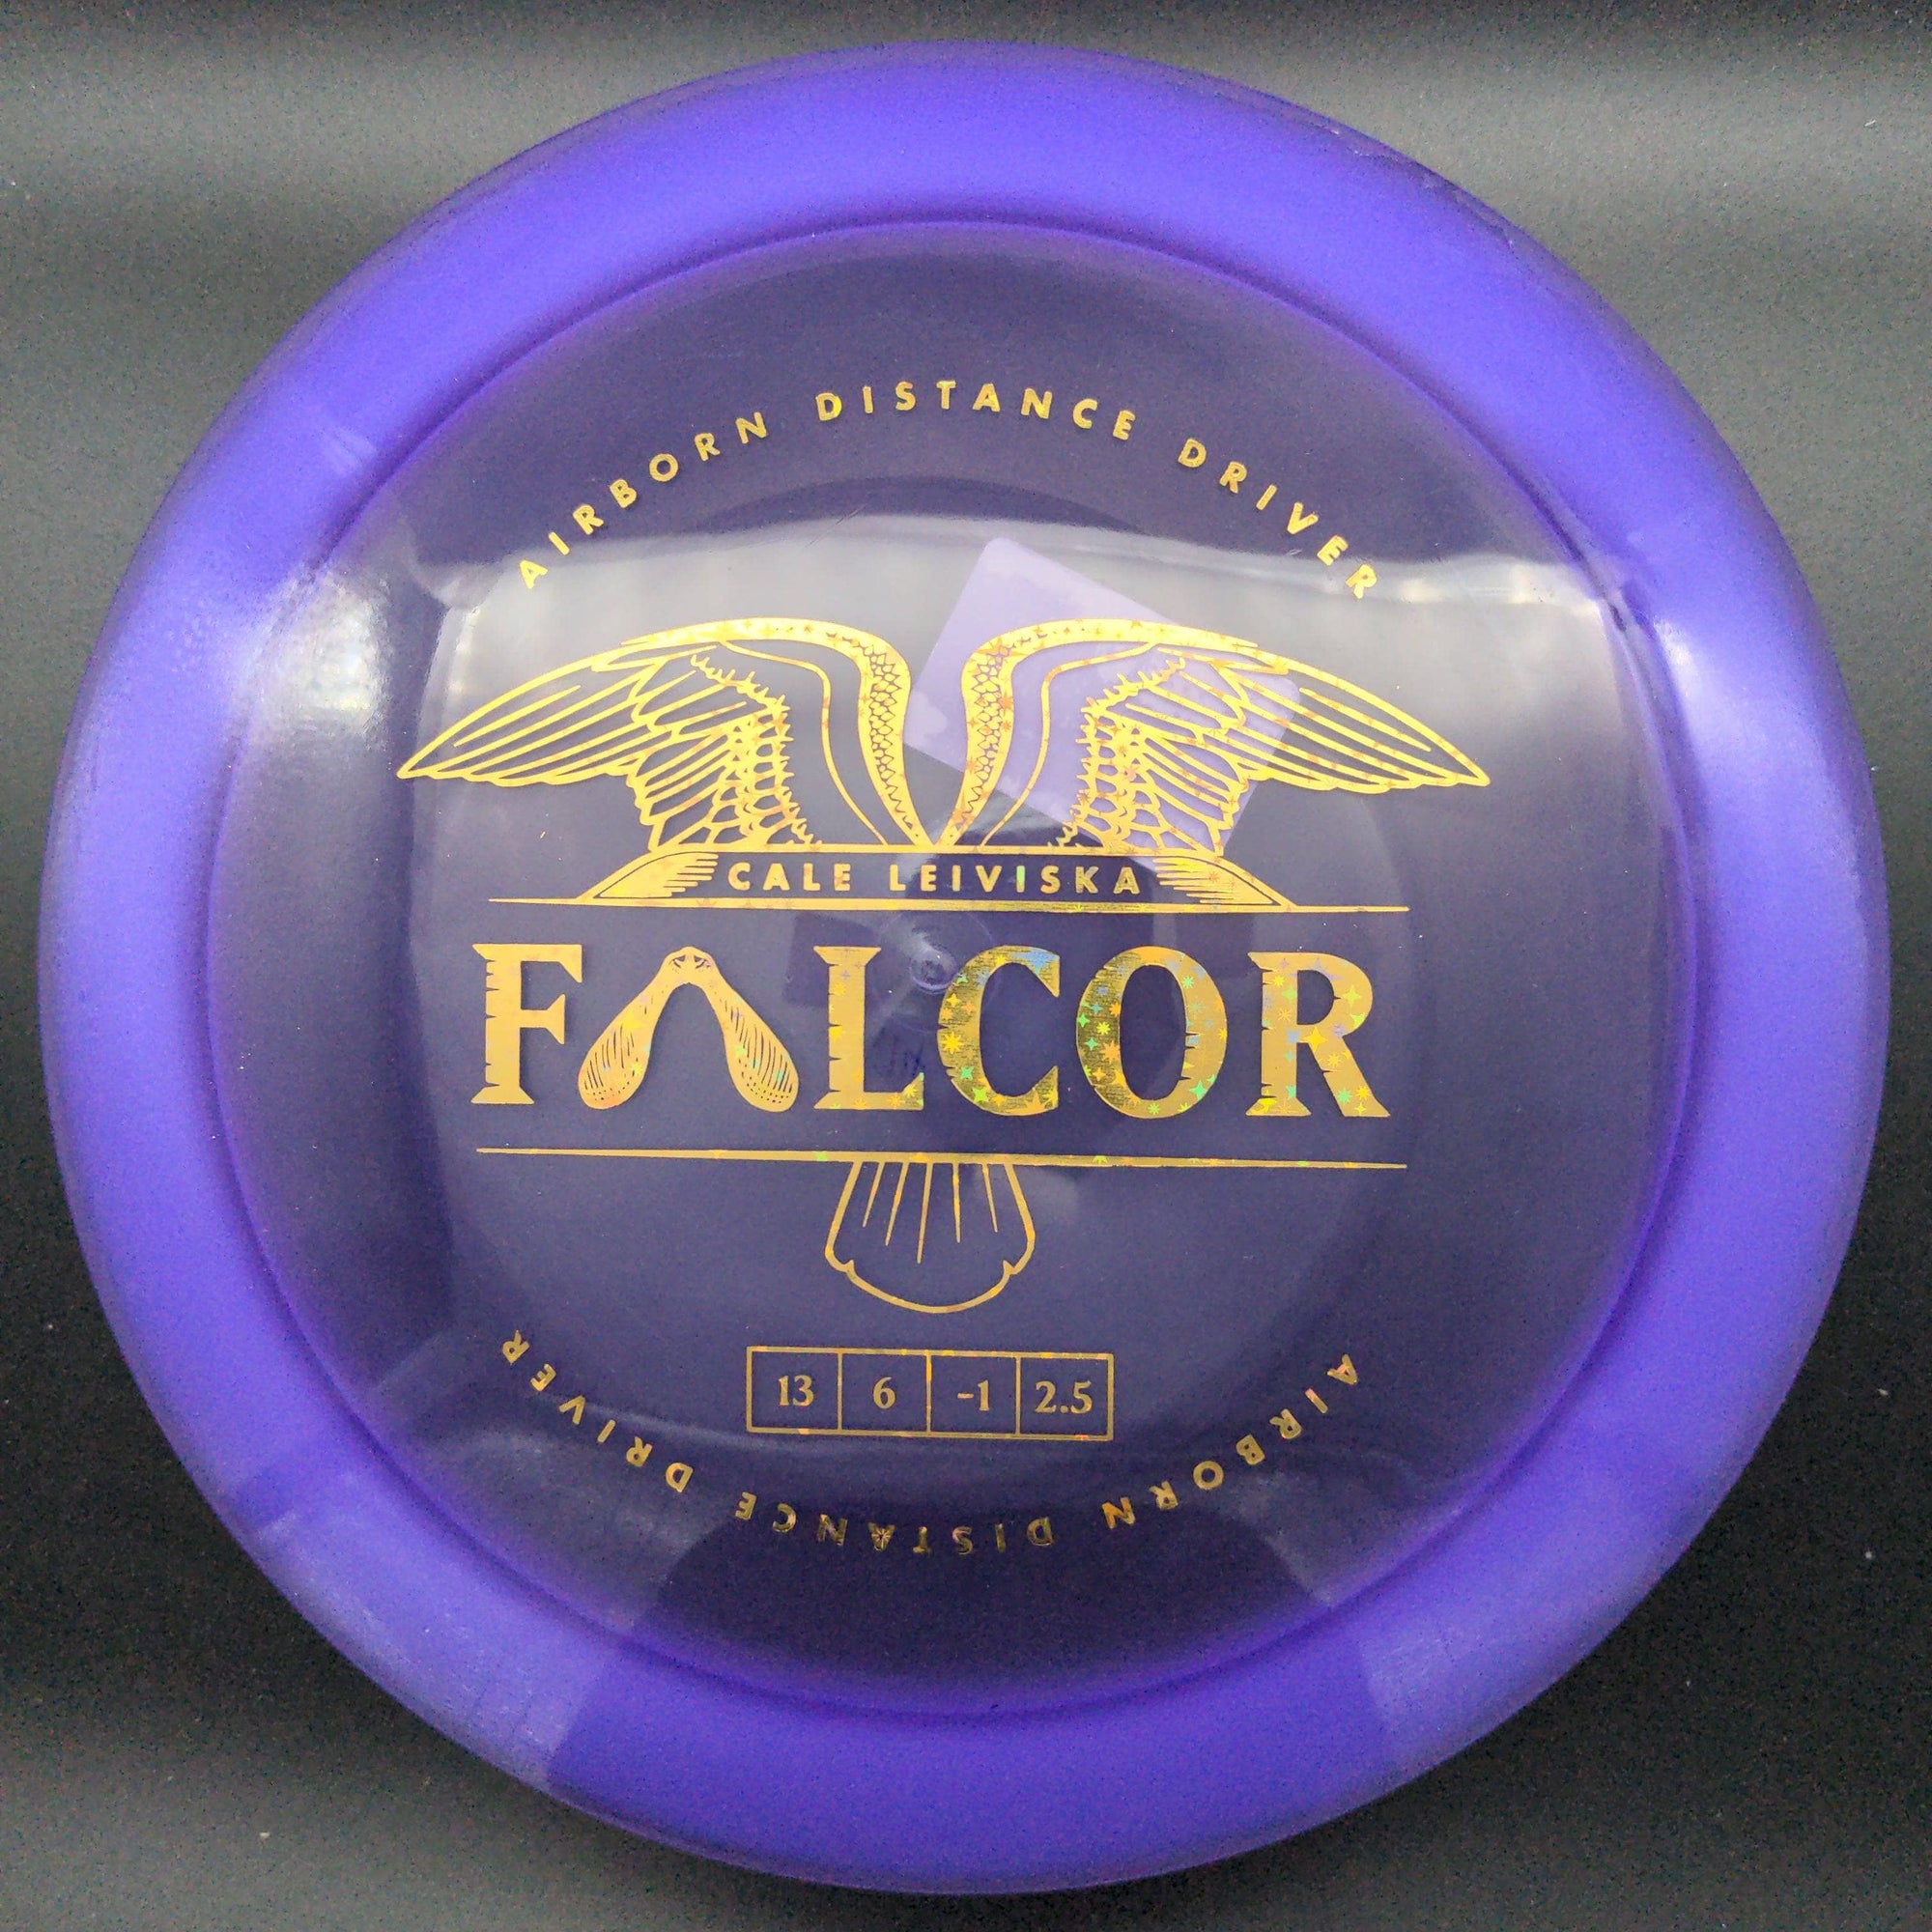 Prodigy Distance Driver Purple Gold Star Stamp 174g Falcor, Cale Leiviska Stamp, 400 Plastic